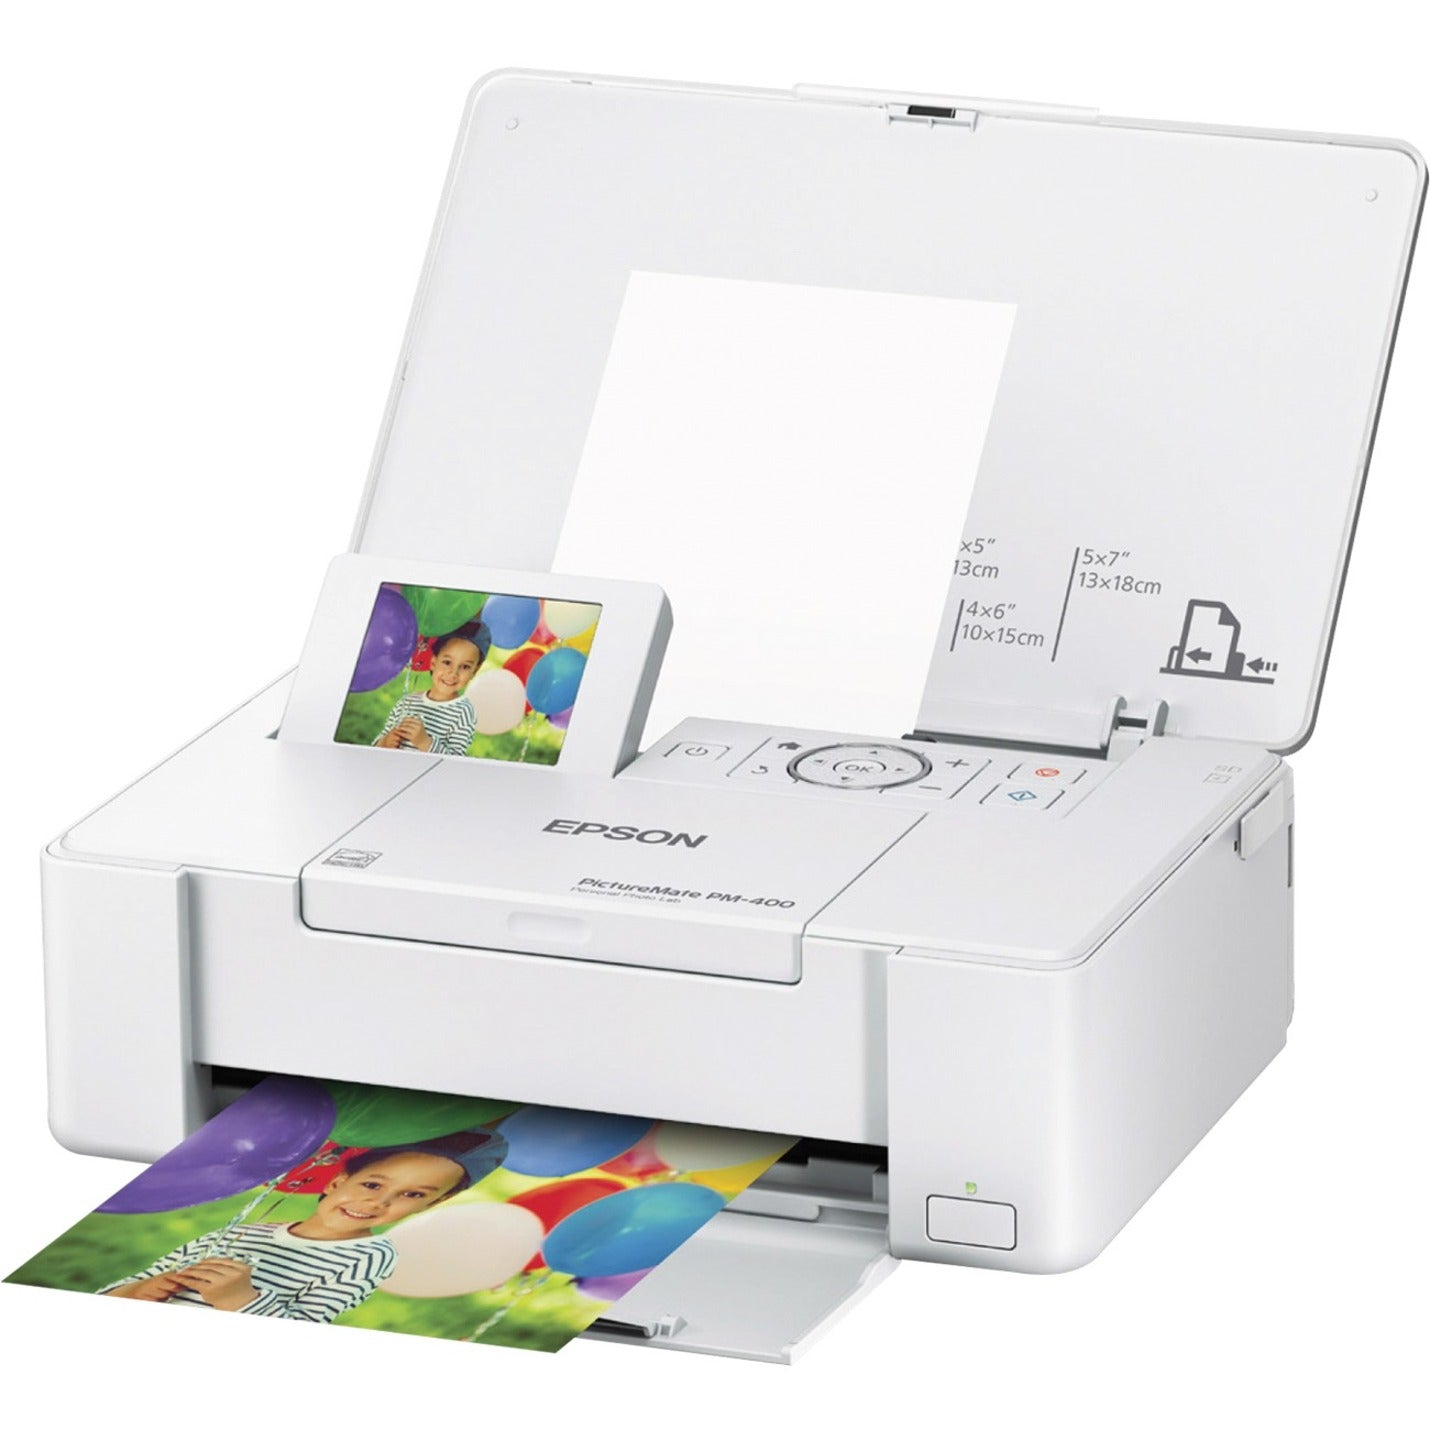 Epson C11CE84201 PictureMate PM-400 Personal Photo Lab, Color Inkjet Printer, Wireless Printing, 5760 x 1440 dpi